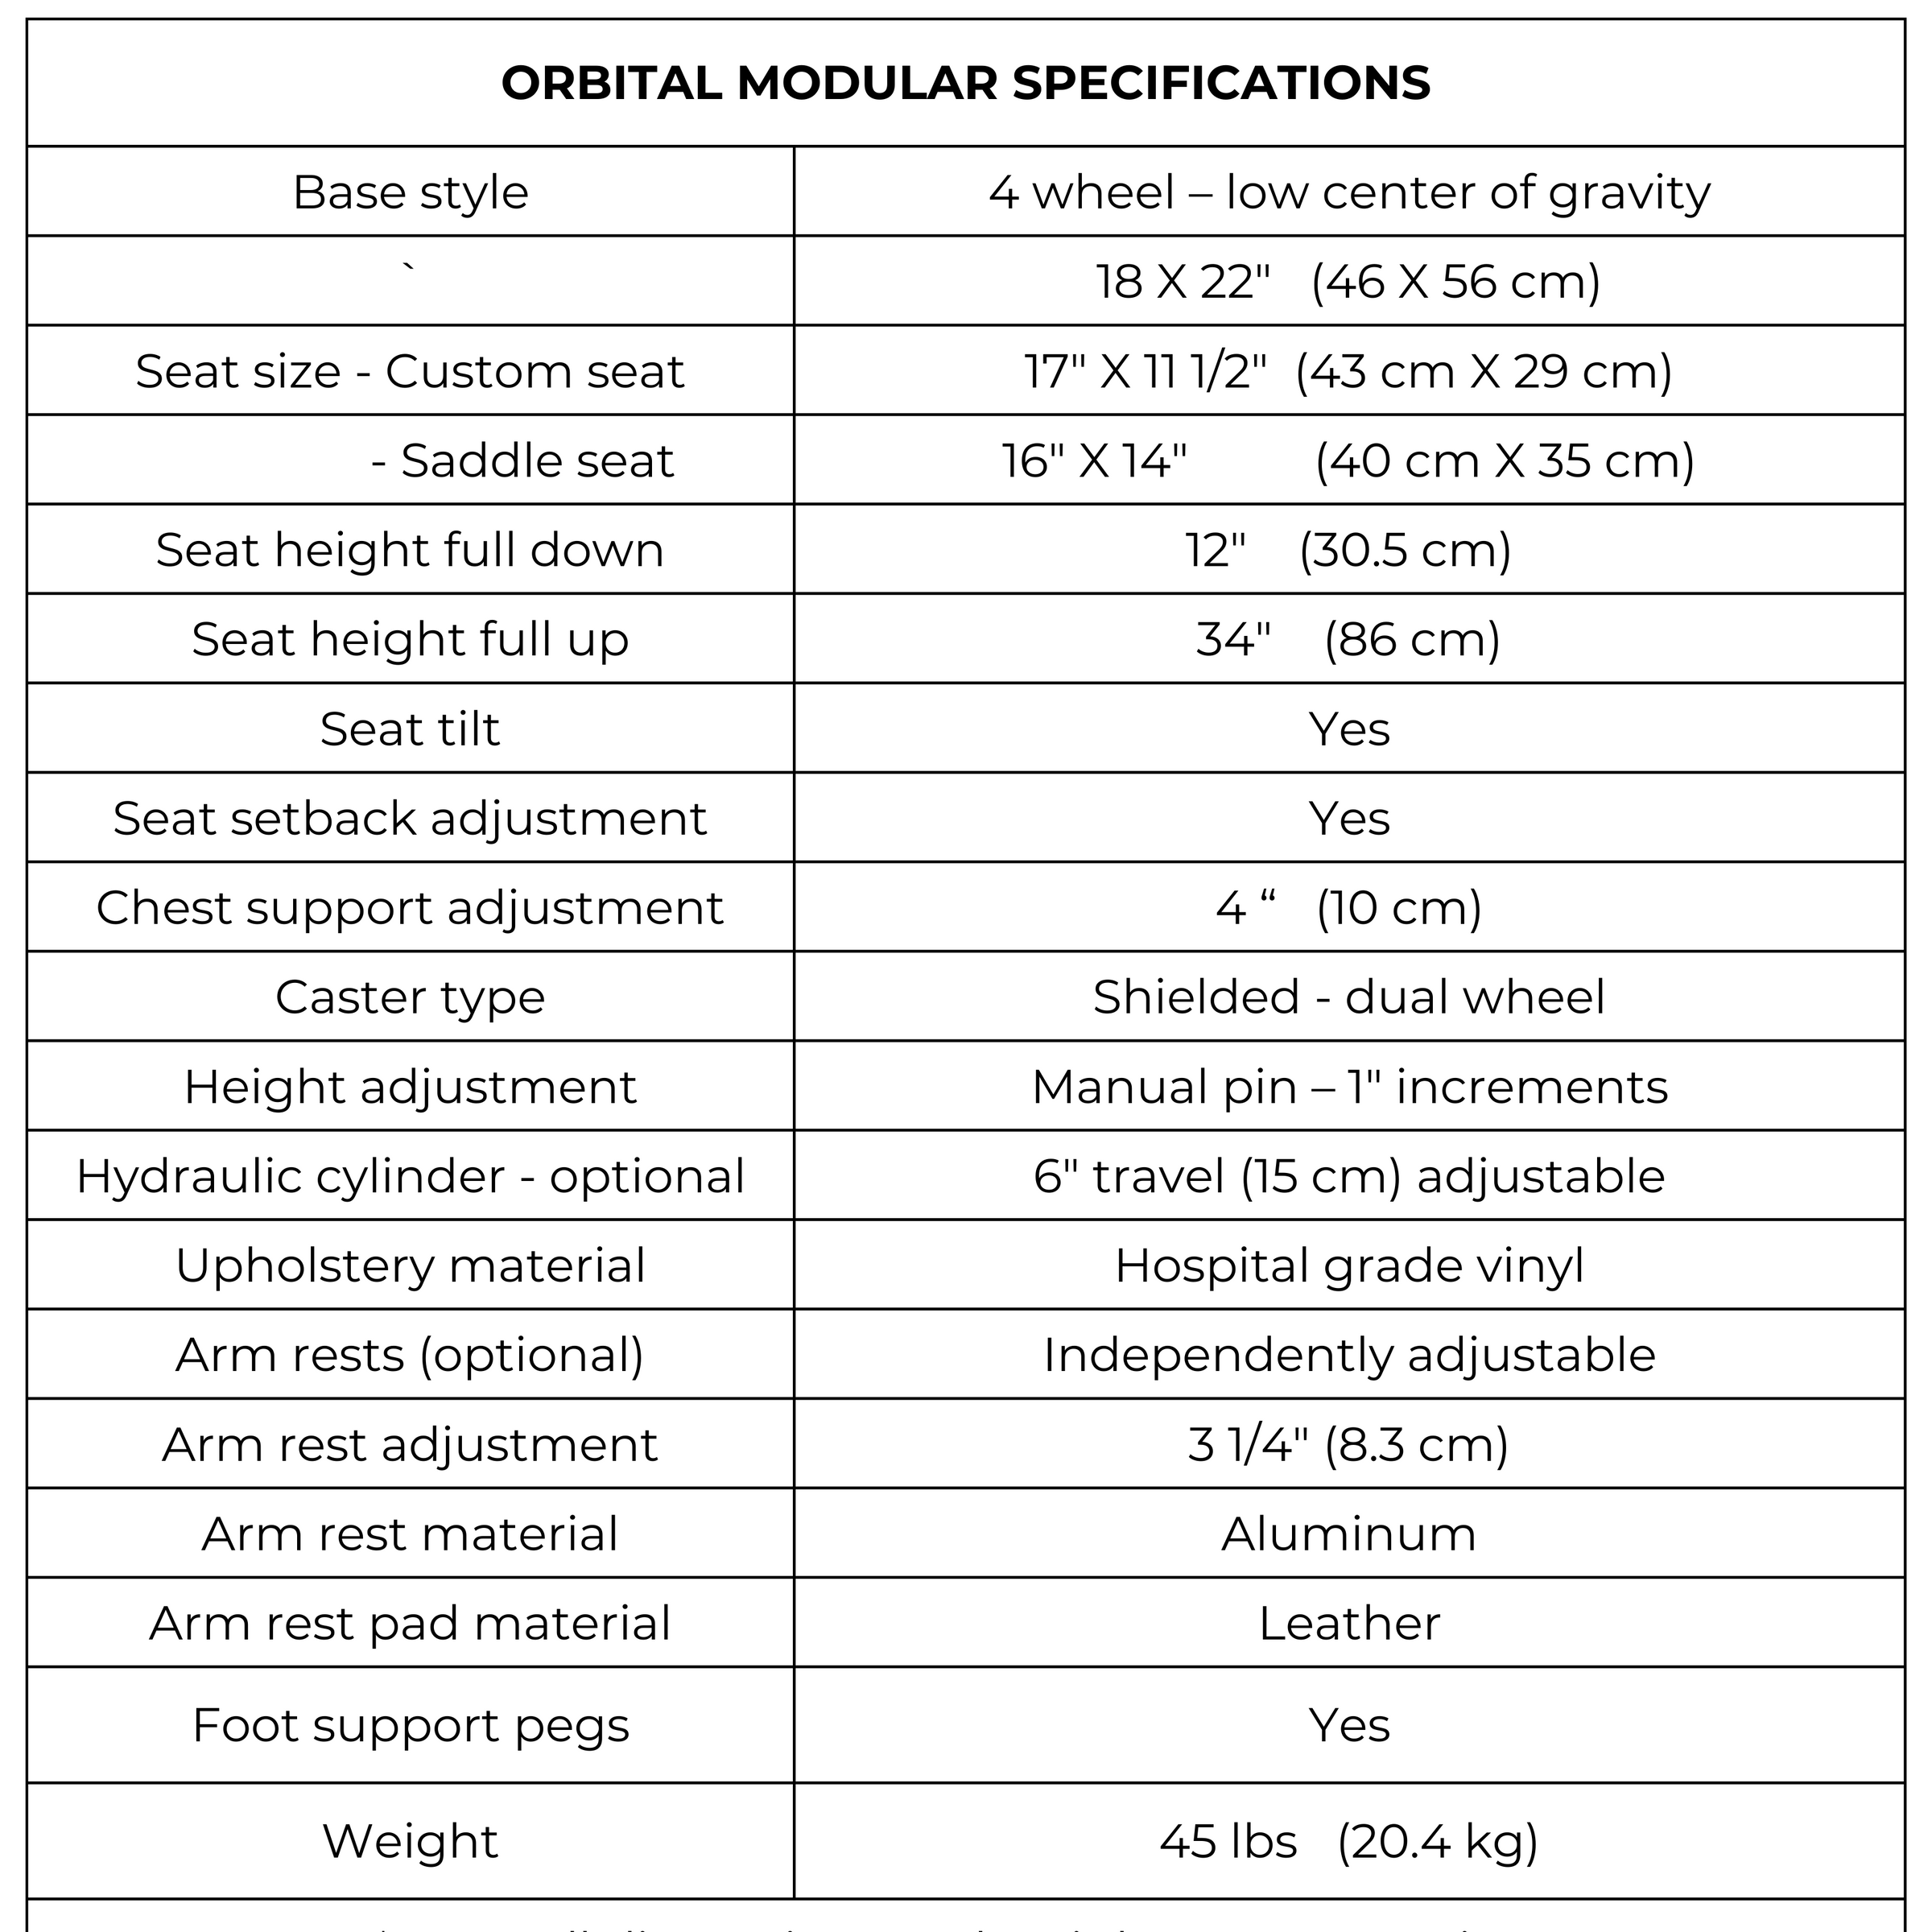 Orbital Modular ergonomic chair specifications